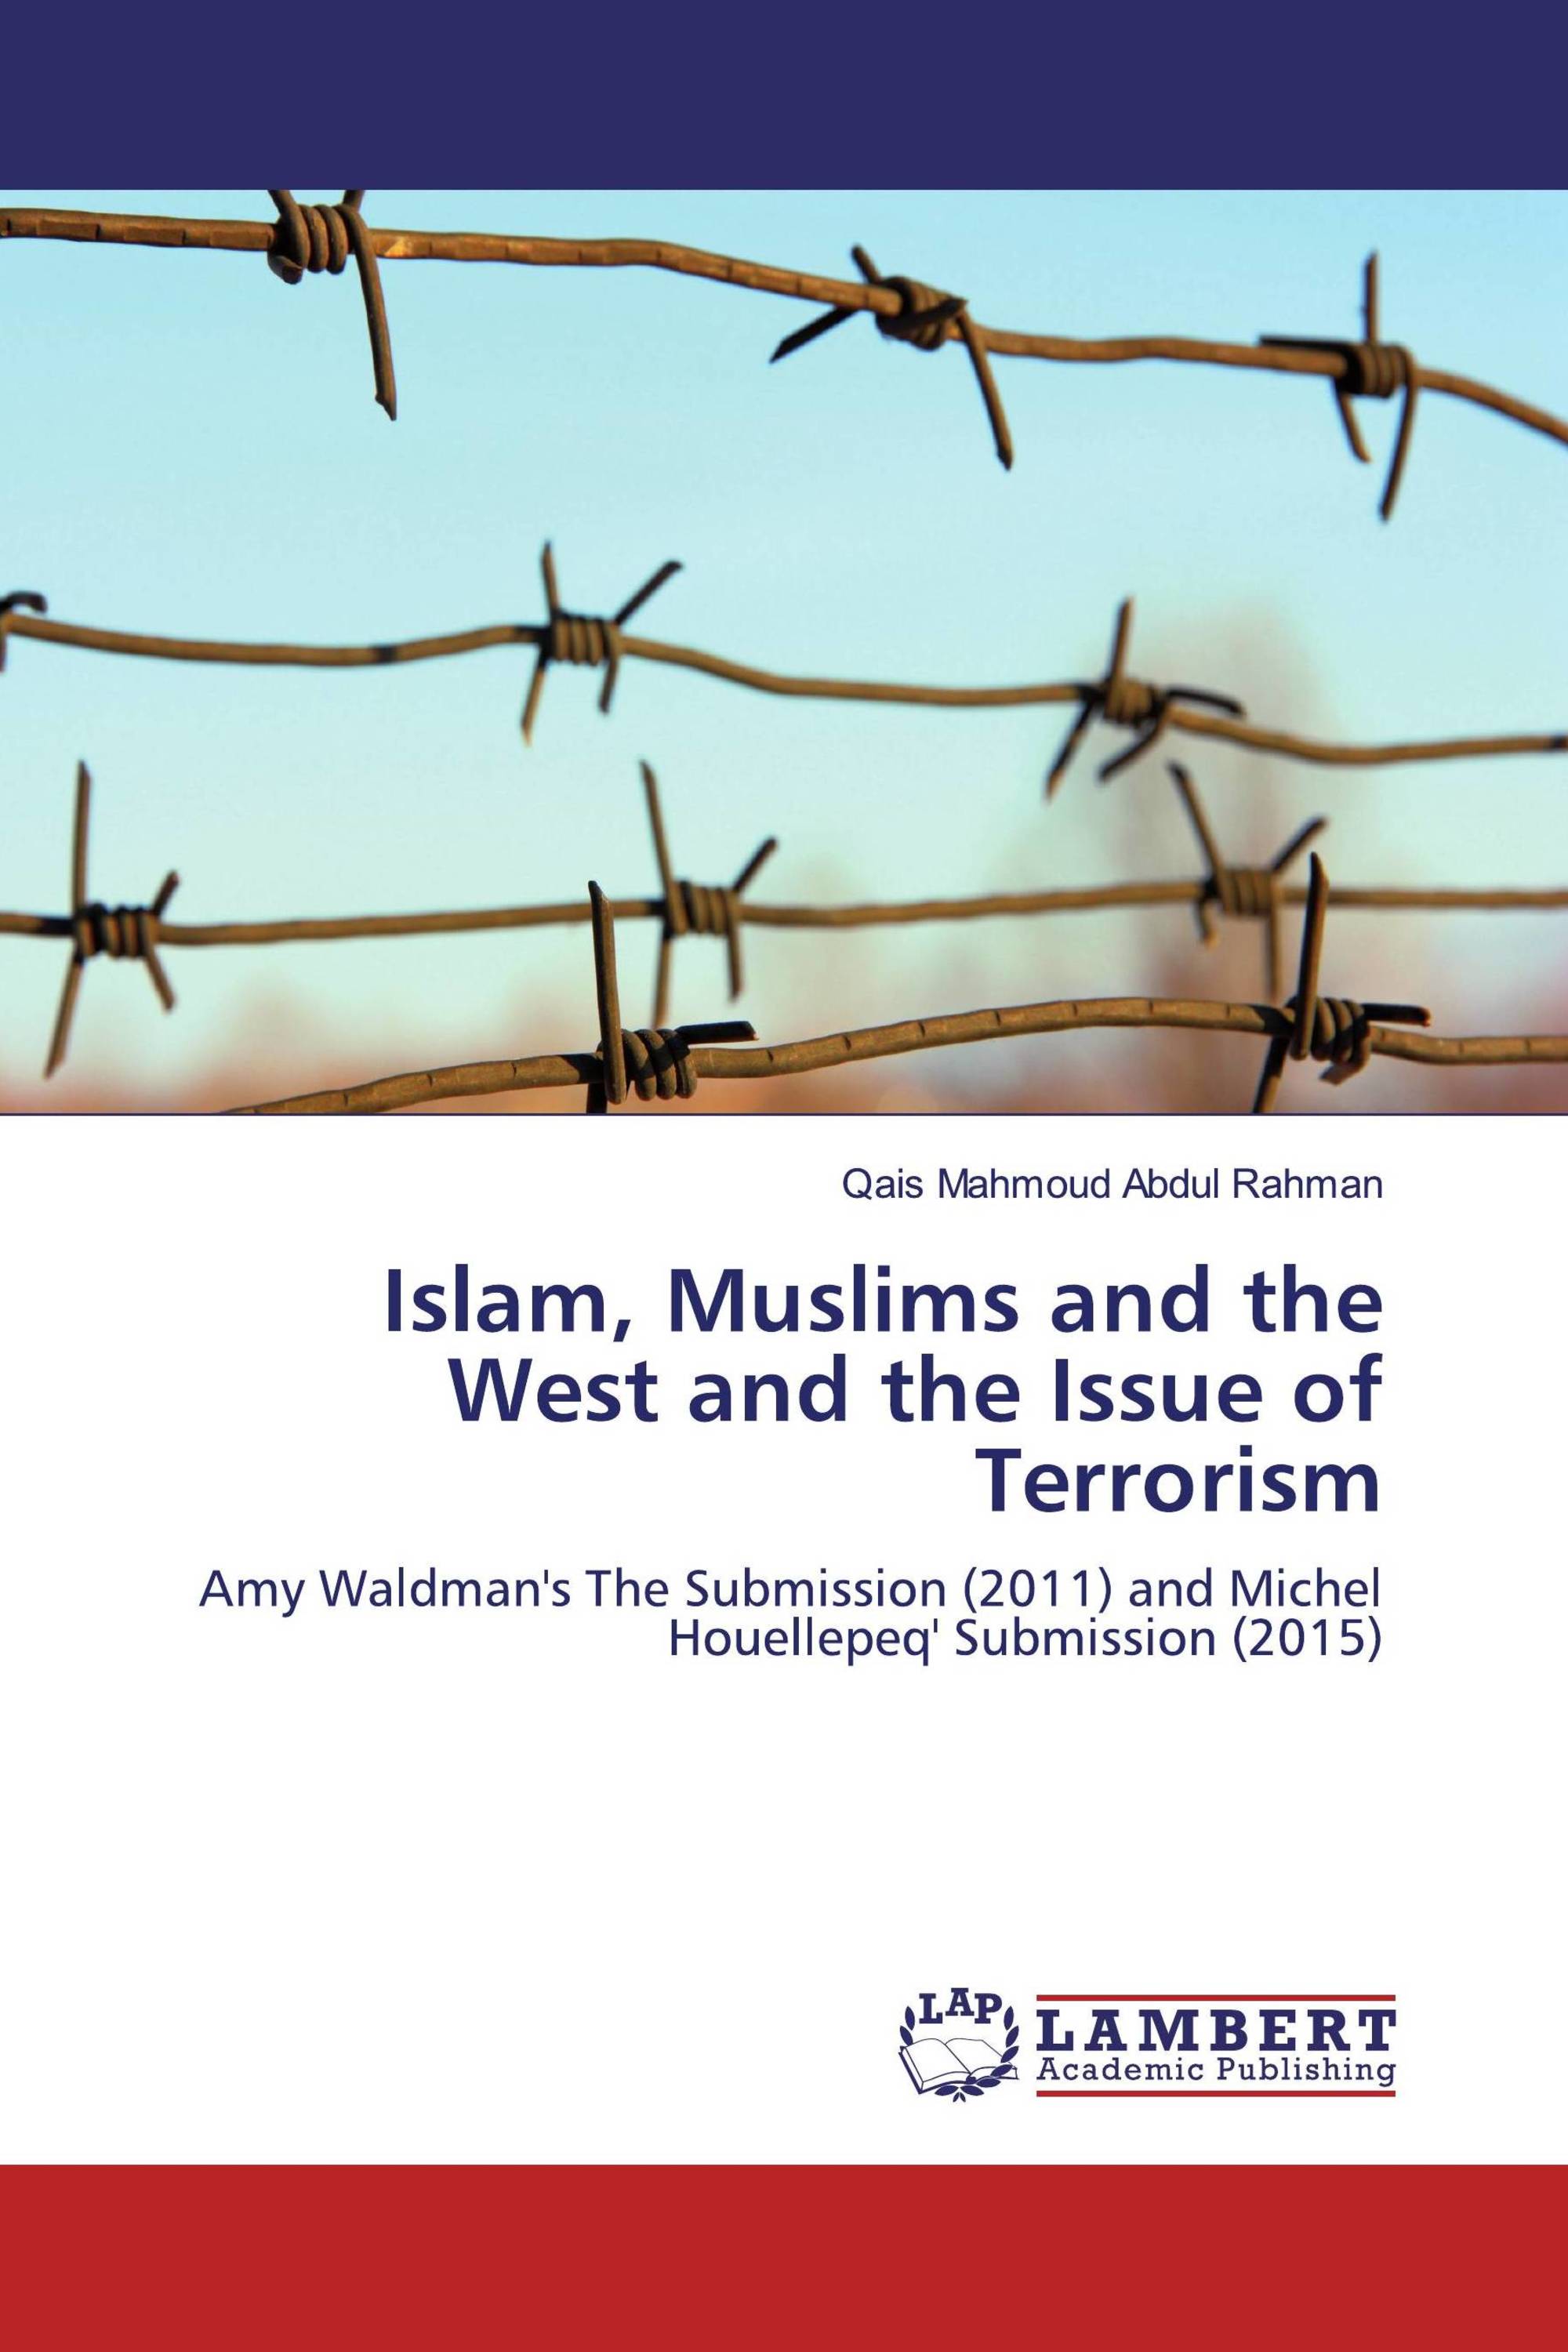 Dissertation proposal on terrorism and islam